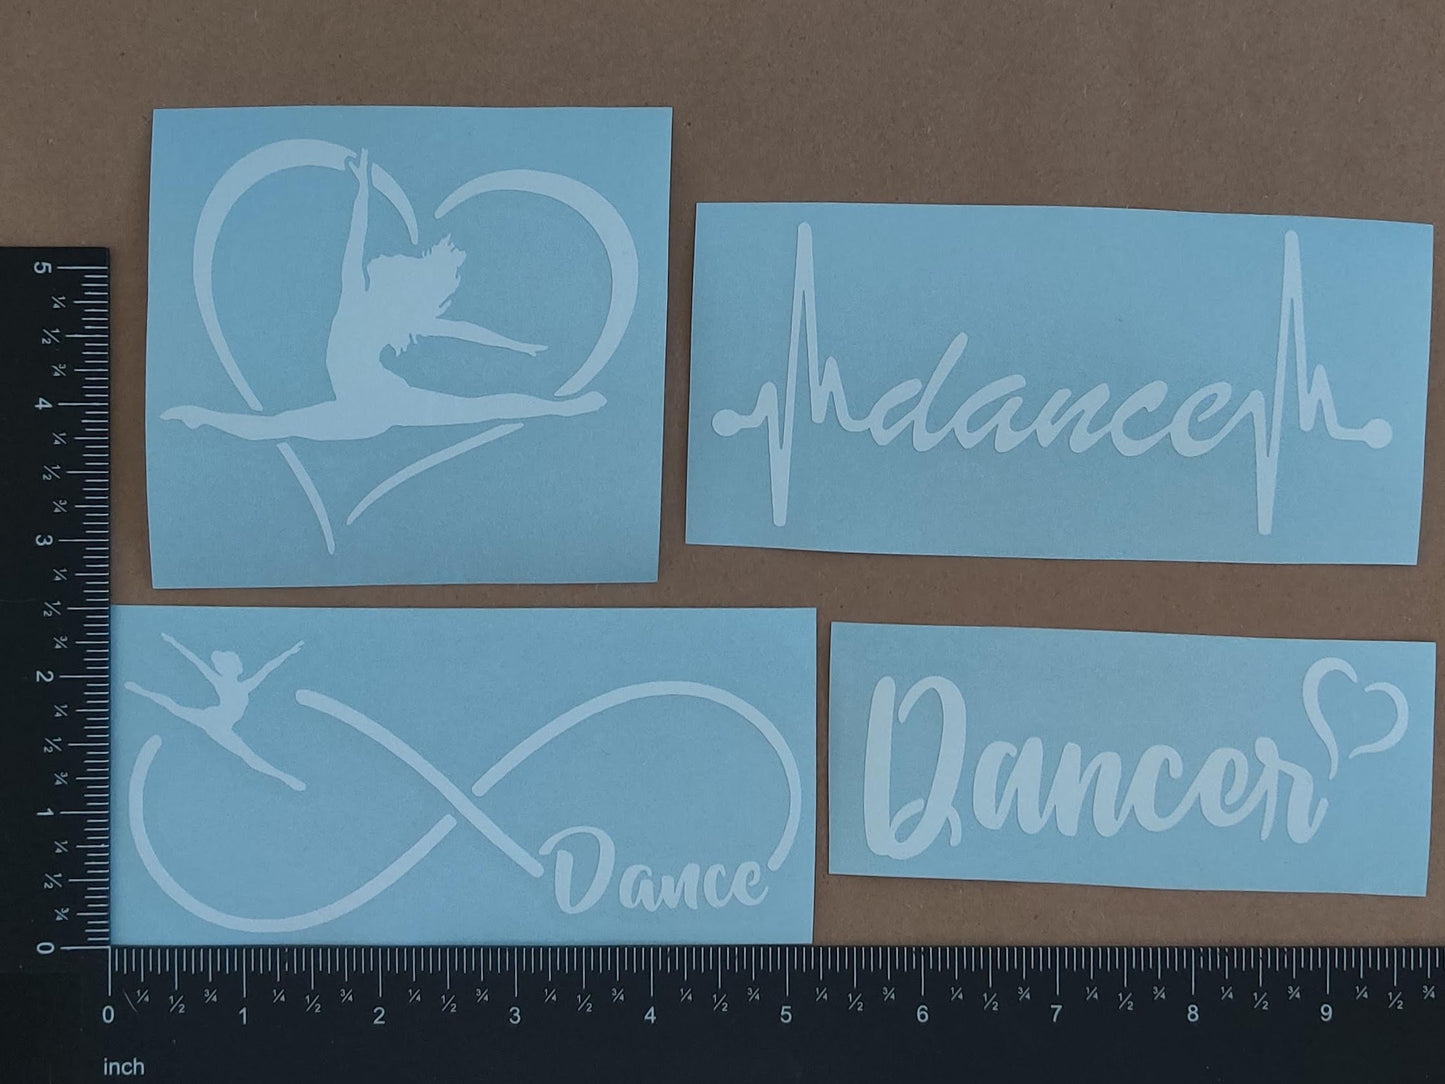 Dance Dancer Decal 4 Pack